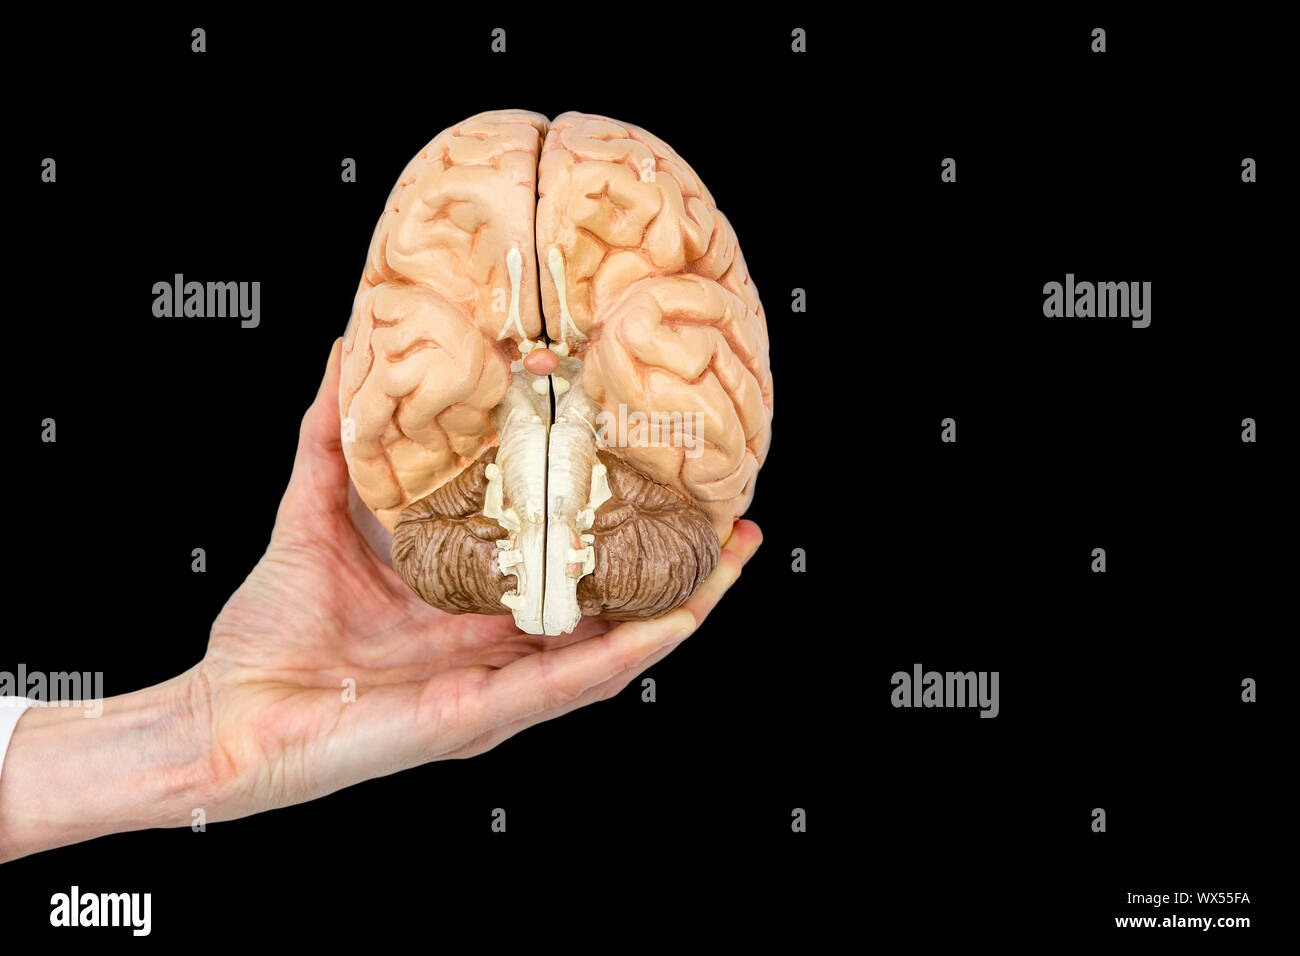 Hand holds model human brain on black background Stock Photo